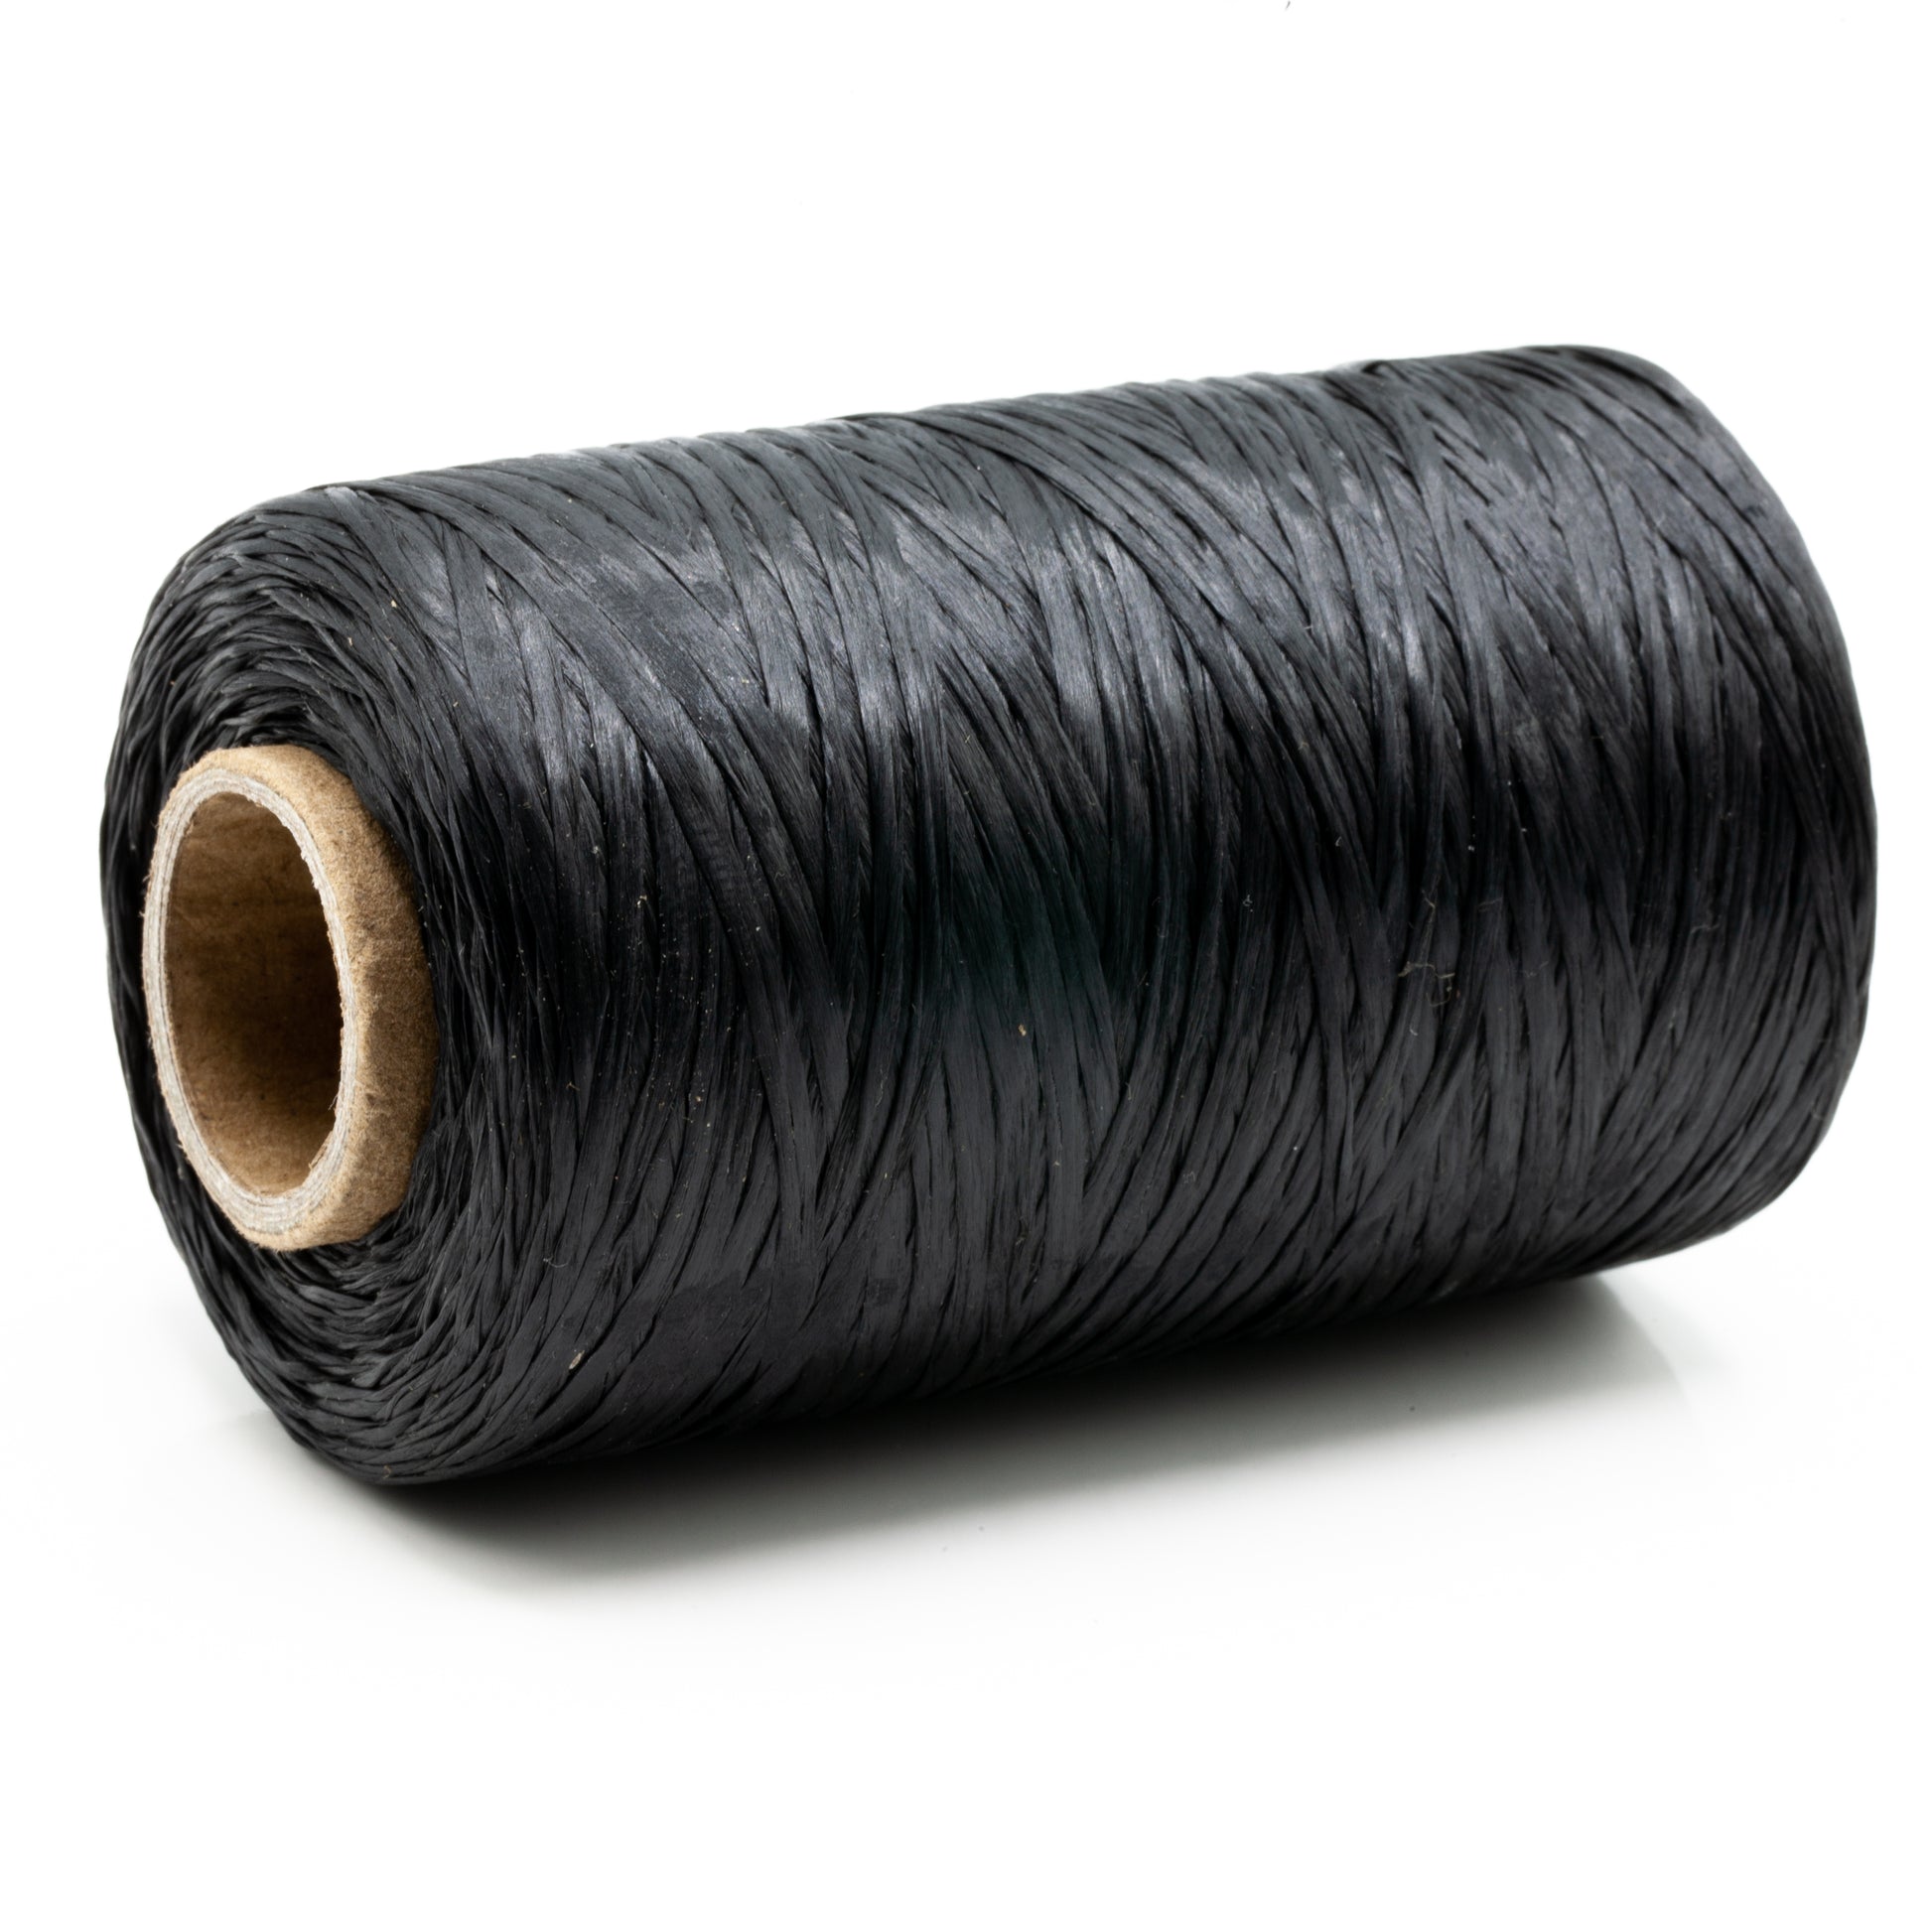 Waxed, Artificial Sinew Thread - Black (side)